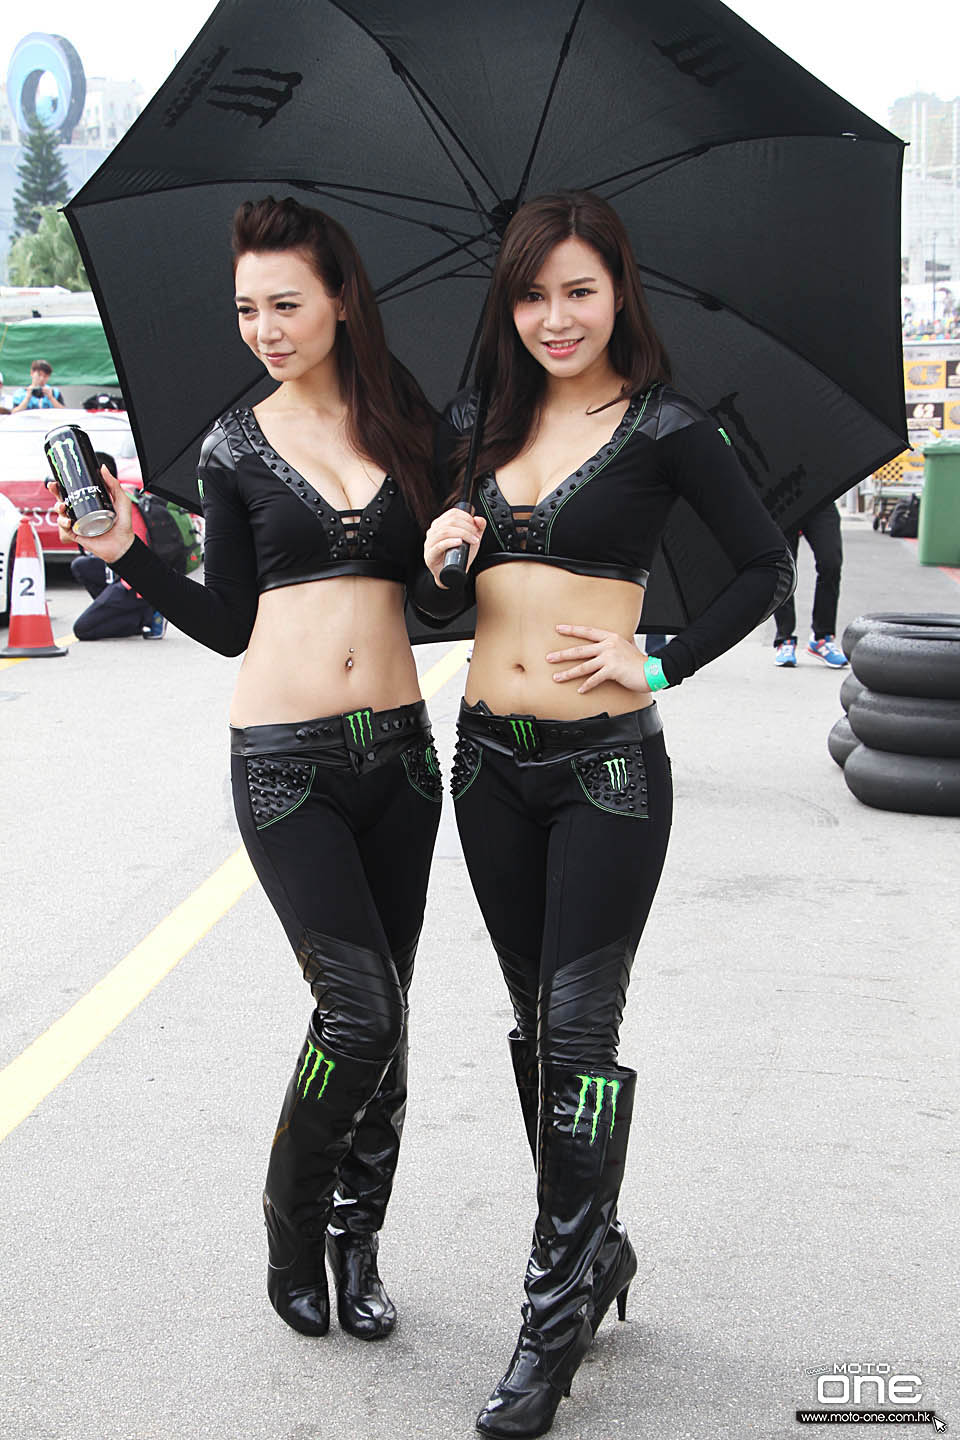 2015 MACAU GP RACING GIRLS